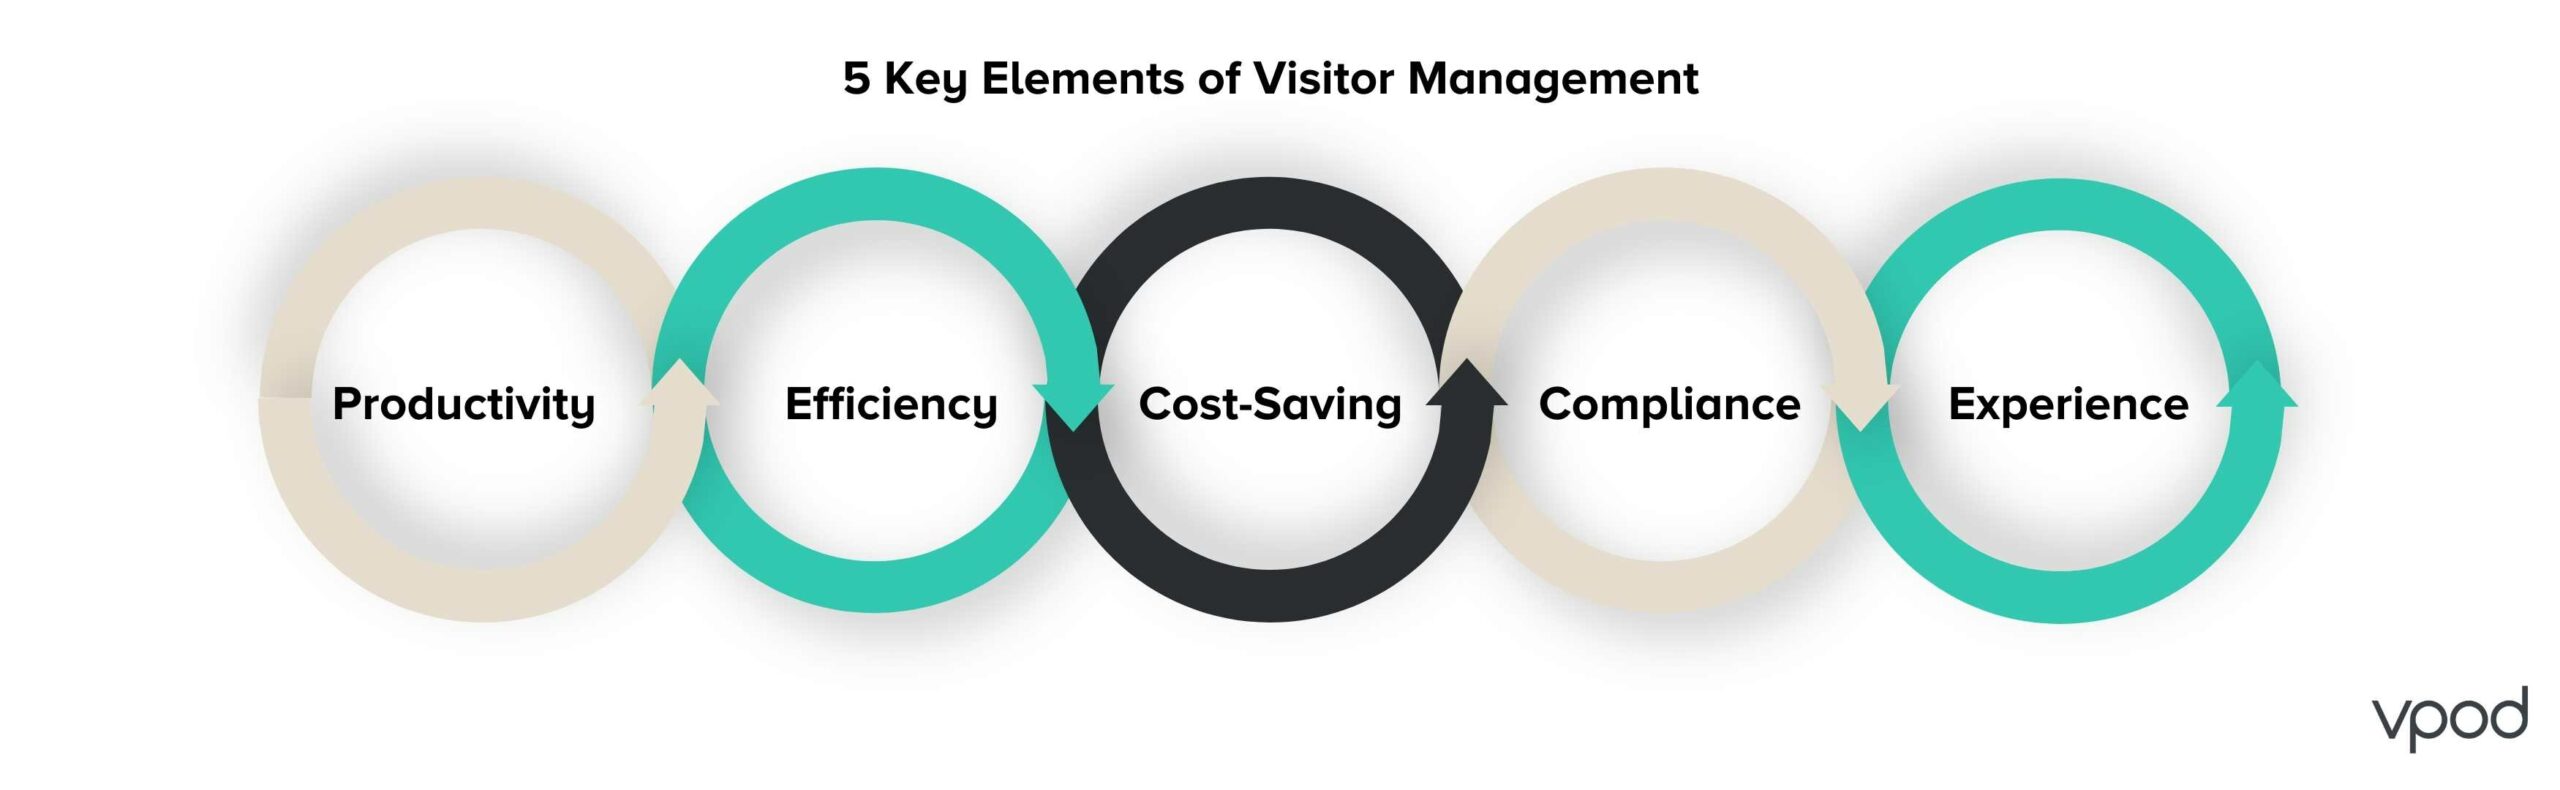 elements-of-visitor-management